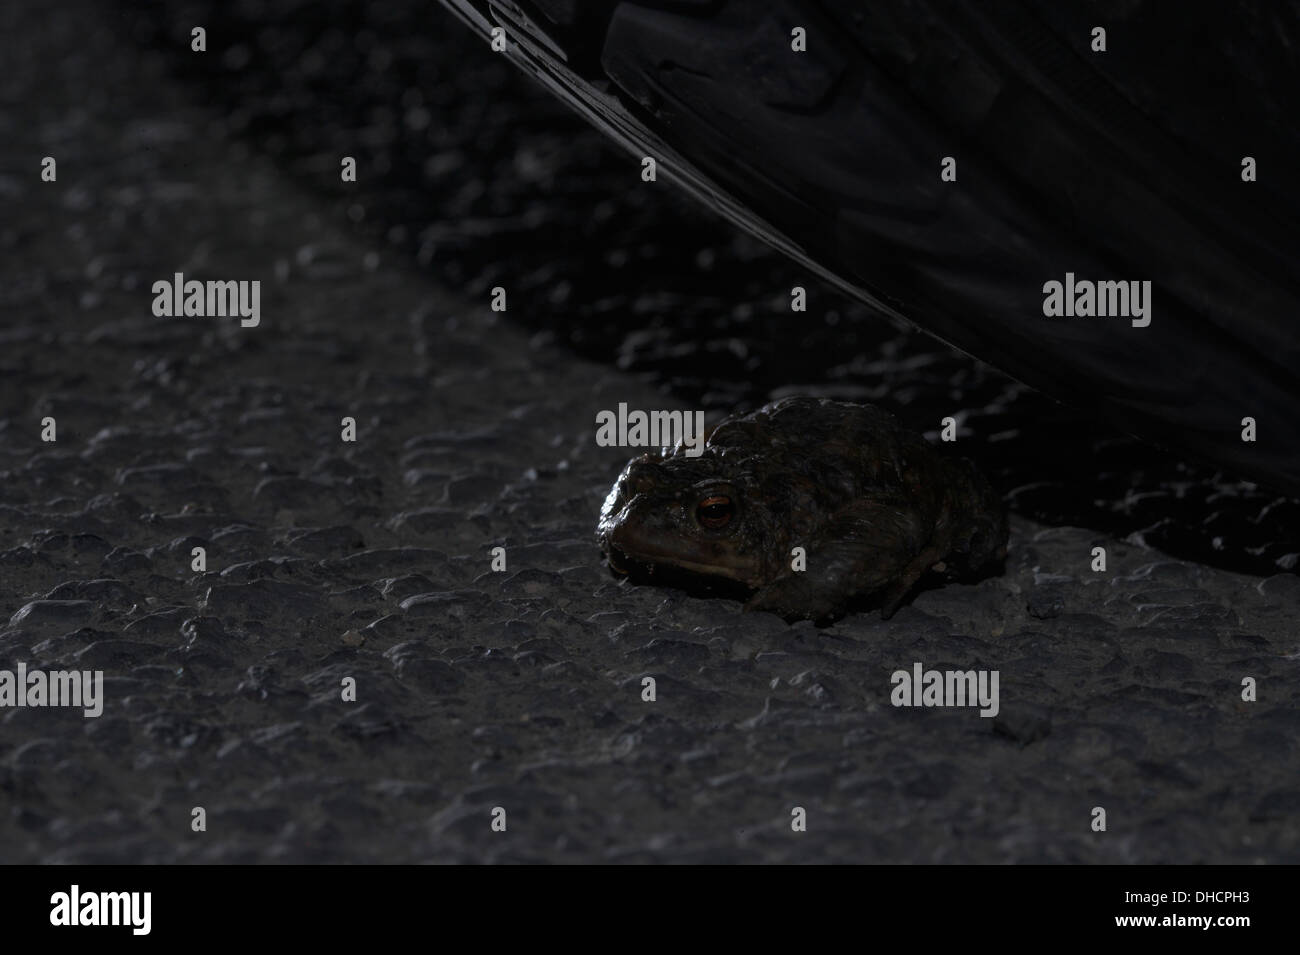 Common toad, bufo bufo, beneath the wheel of a car on buzy main road Stock Photo